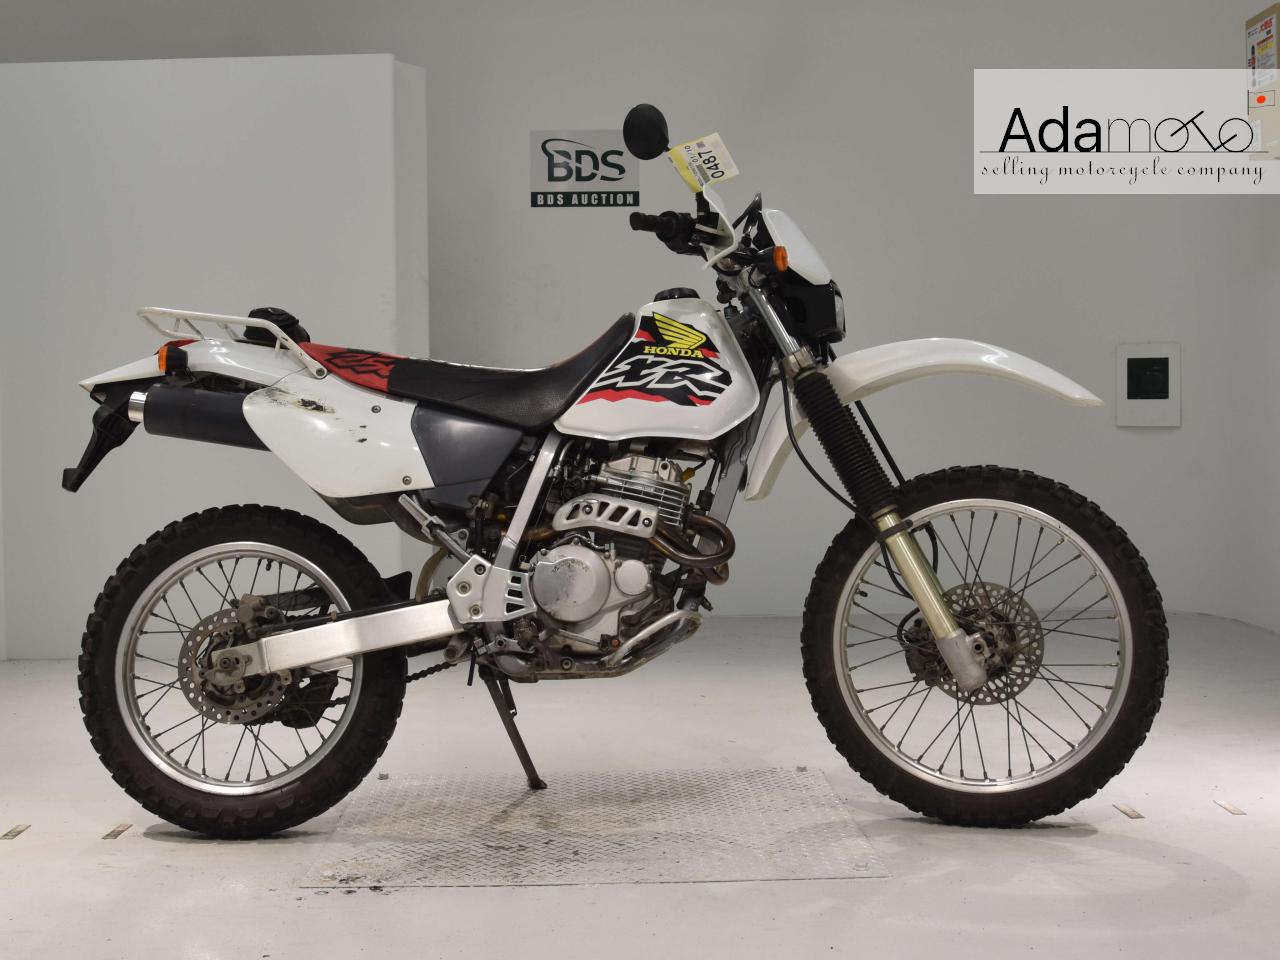 Honda XR250 - Adamoto - Motorcycles from Japan